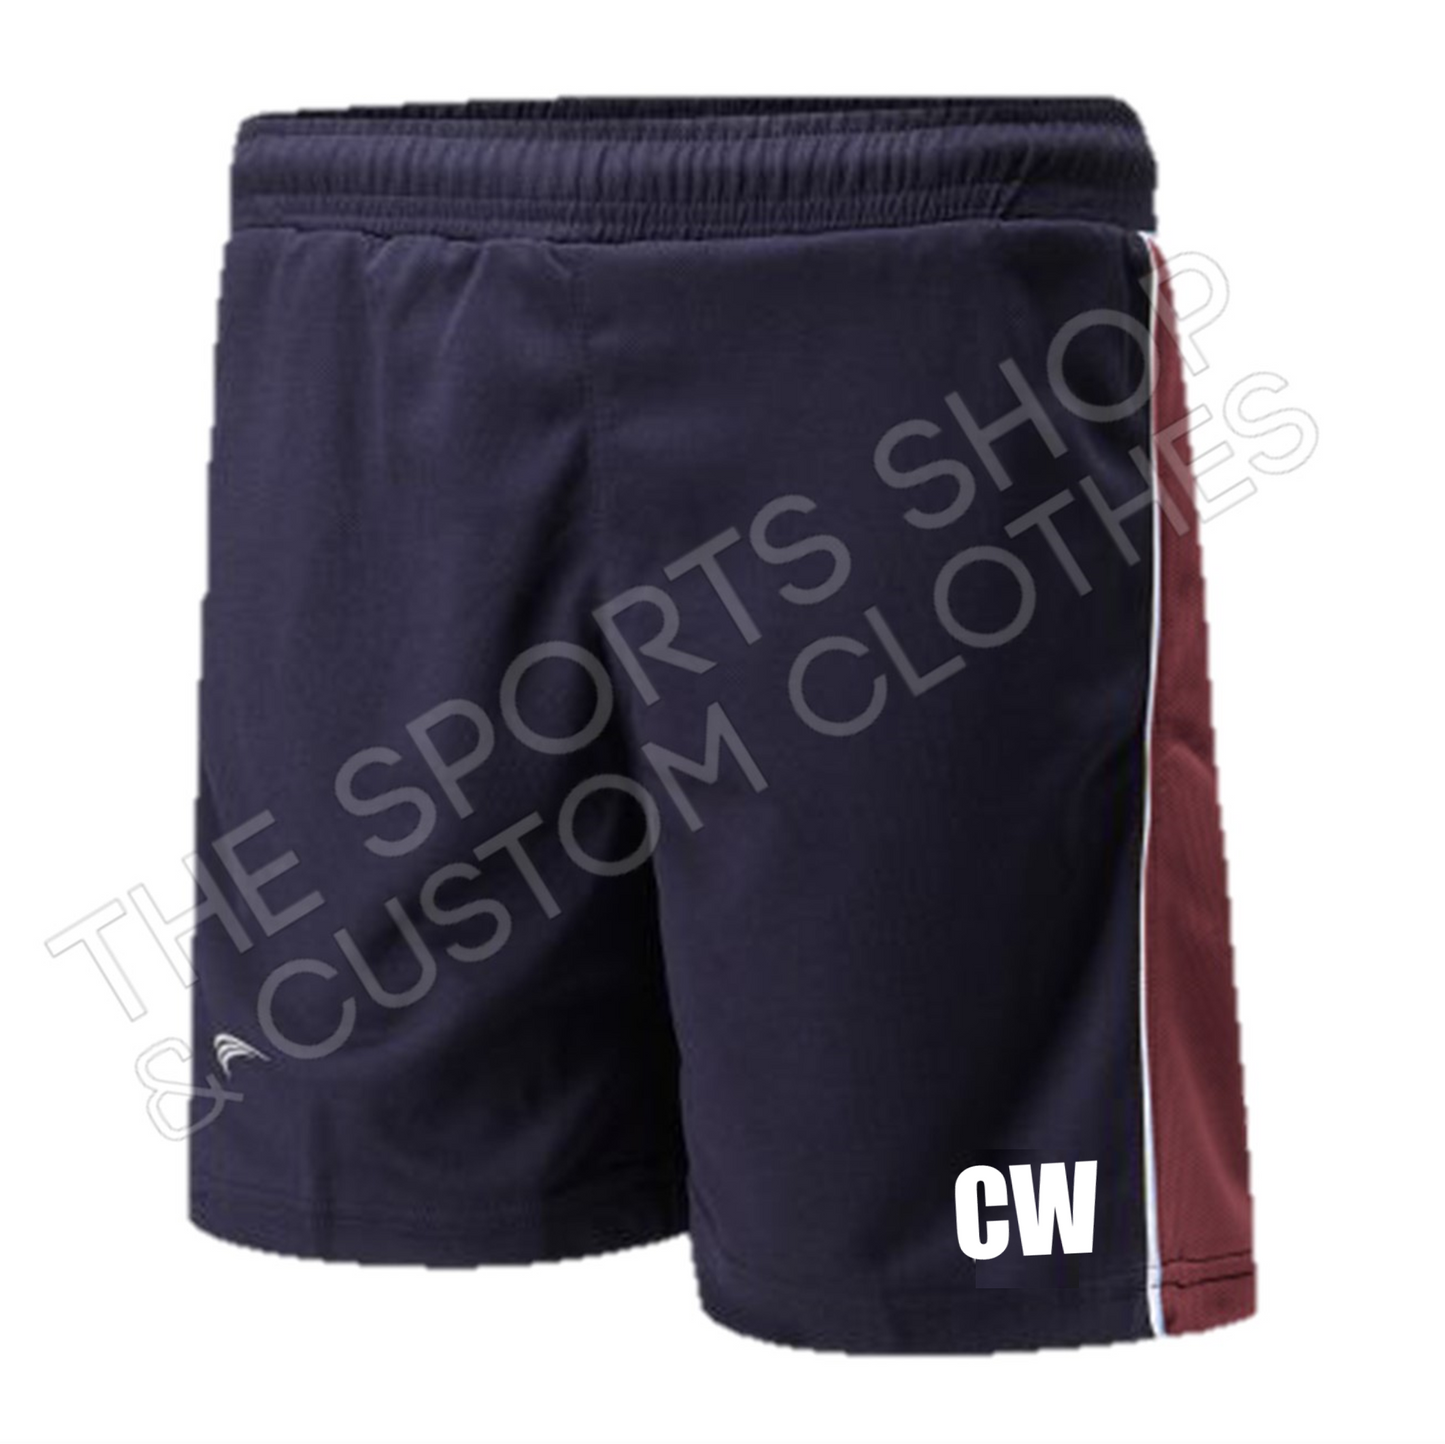 Crestwood School P.E. Shorts [CWS]